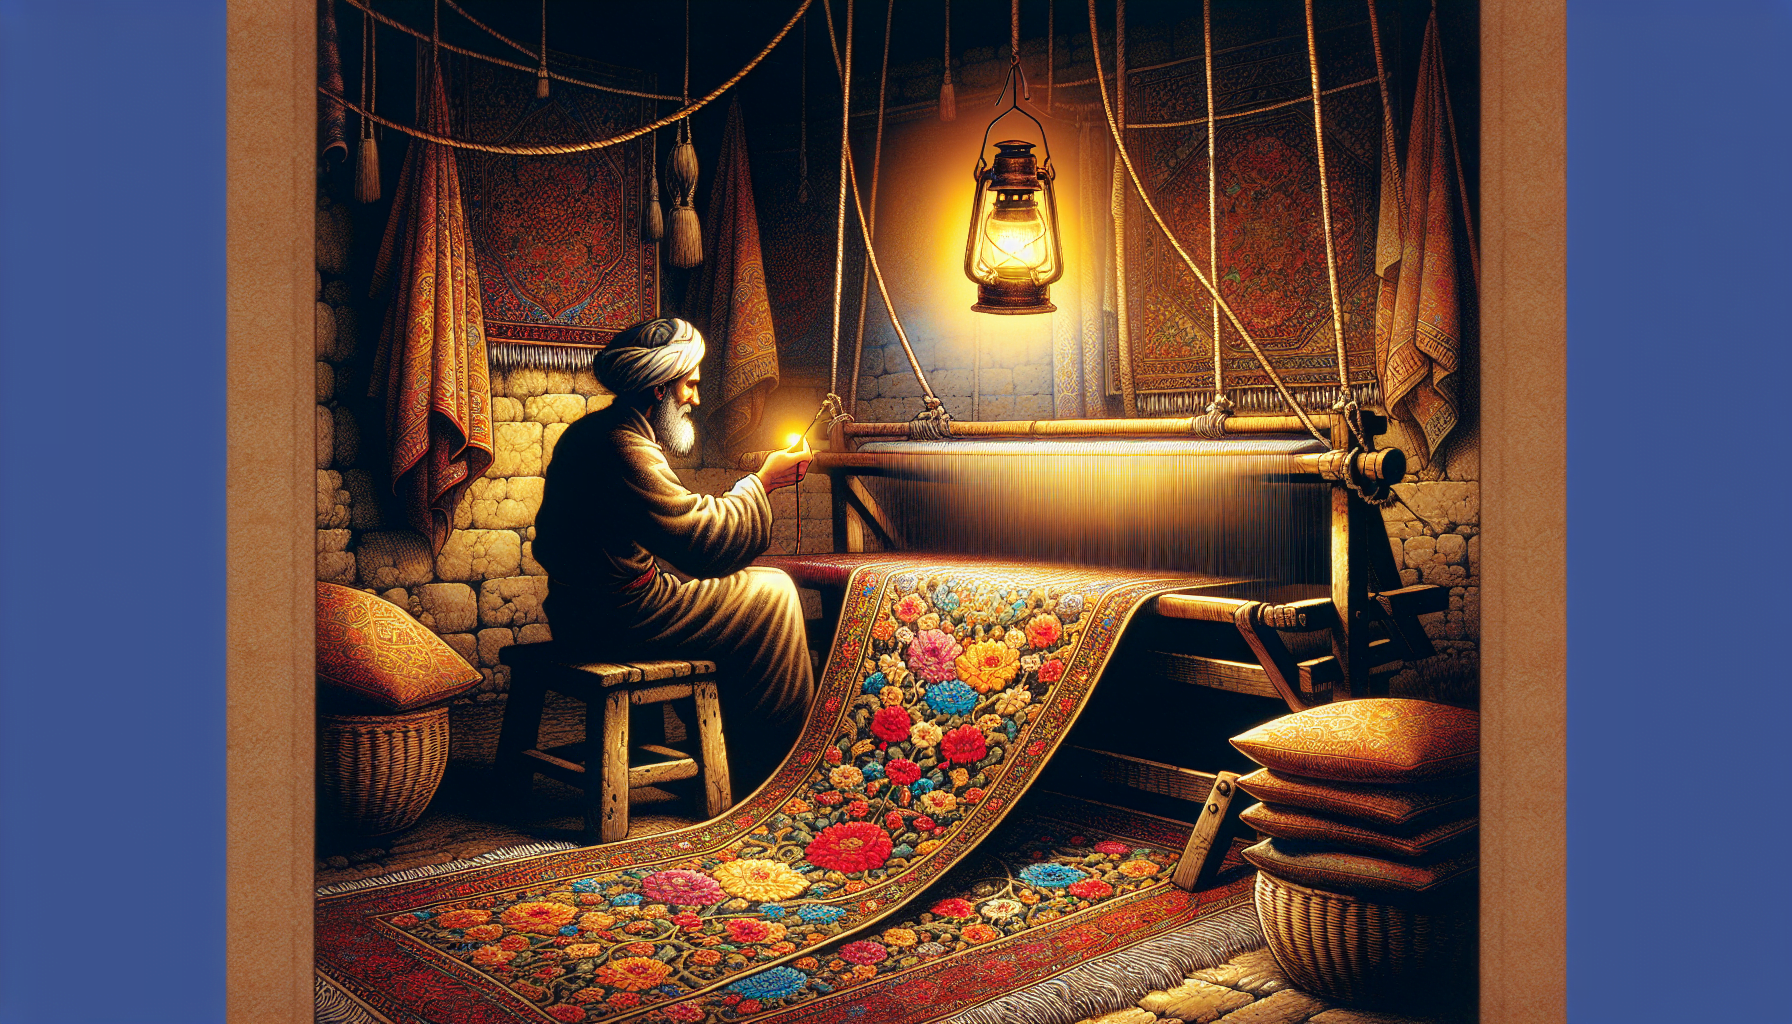 Artistic illustration of skilled artisan hand-knotting a Persian rug